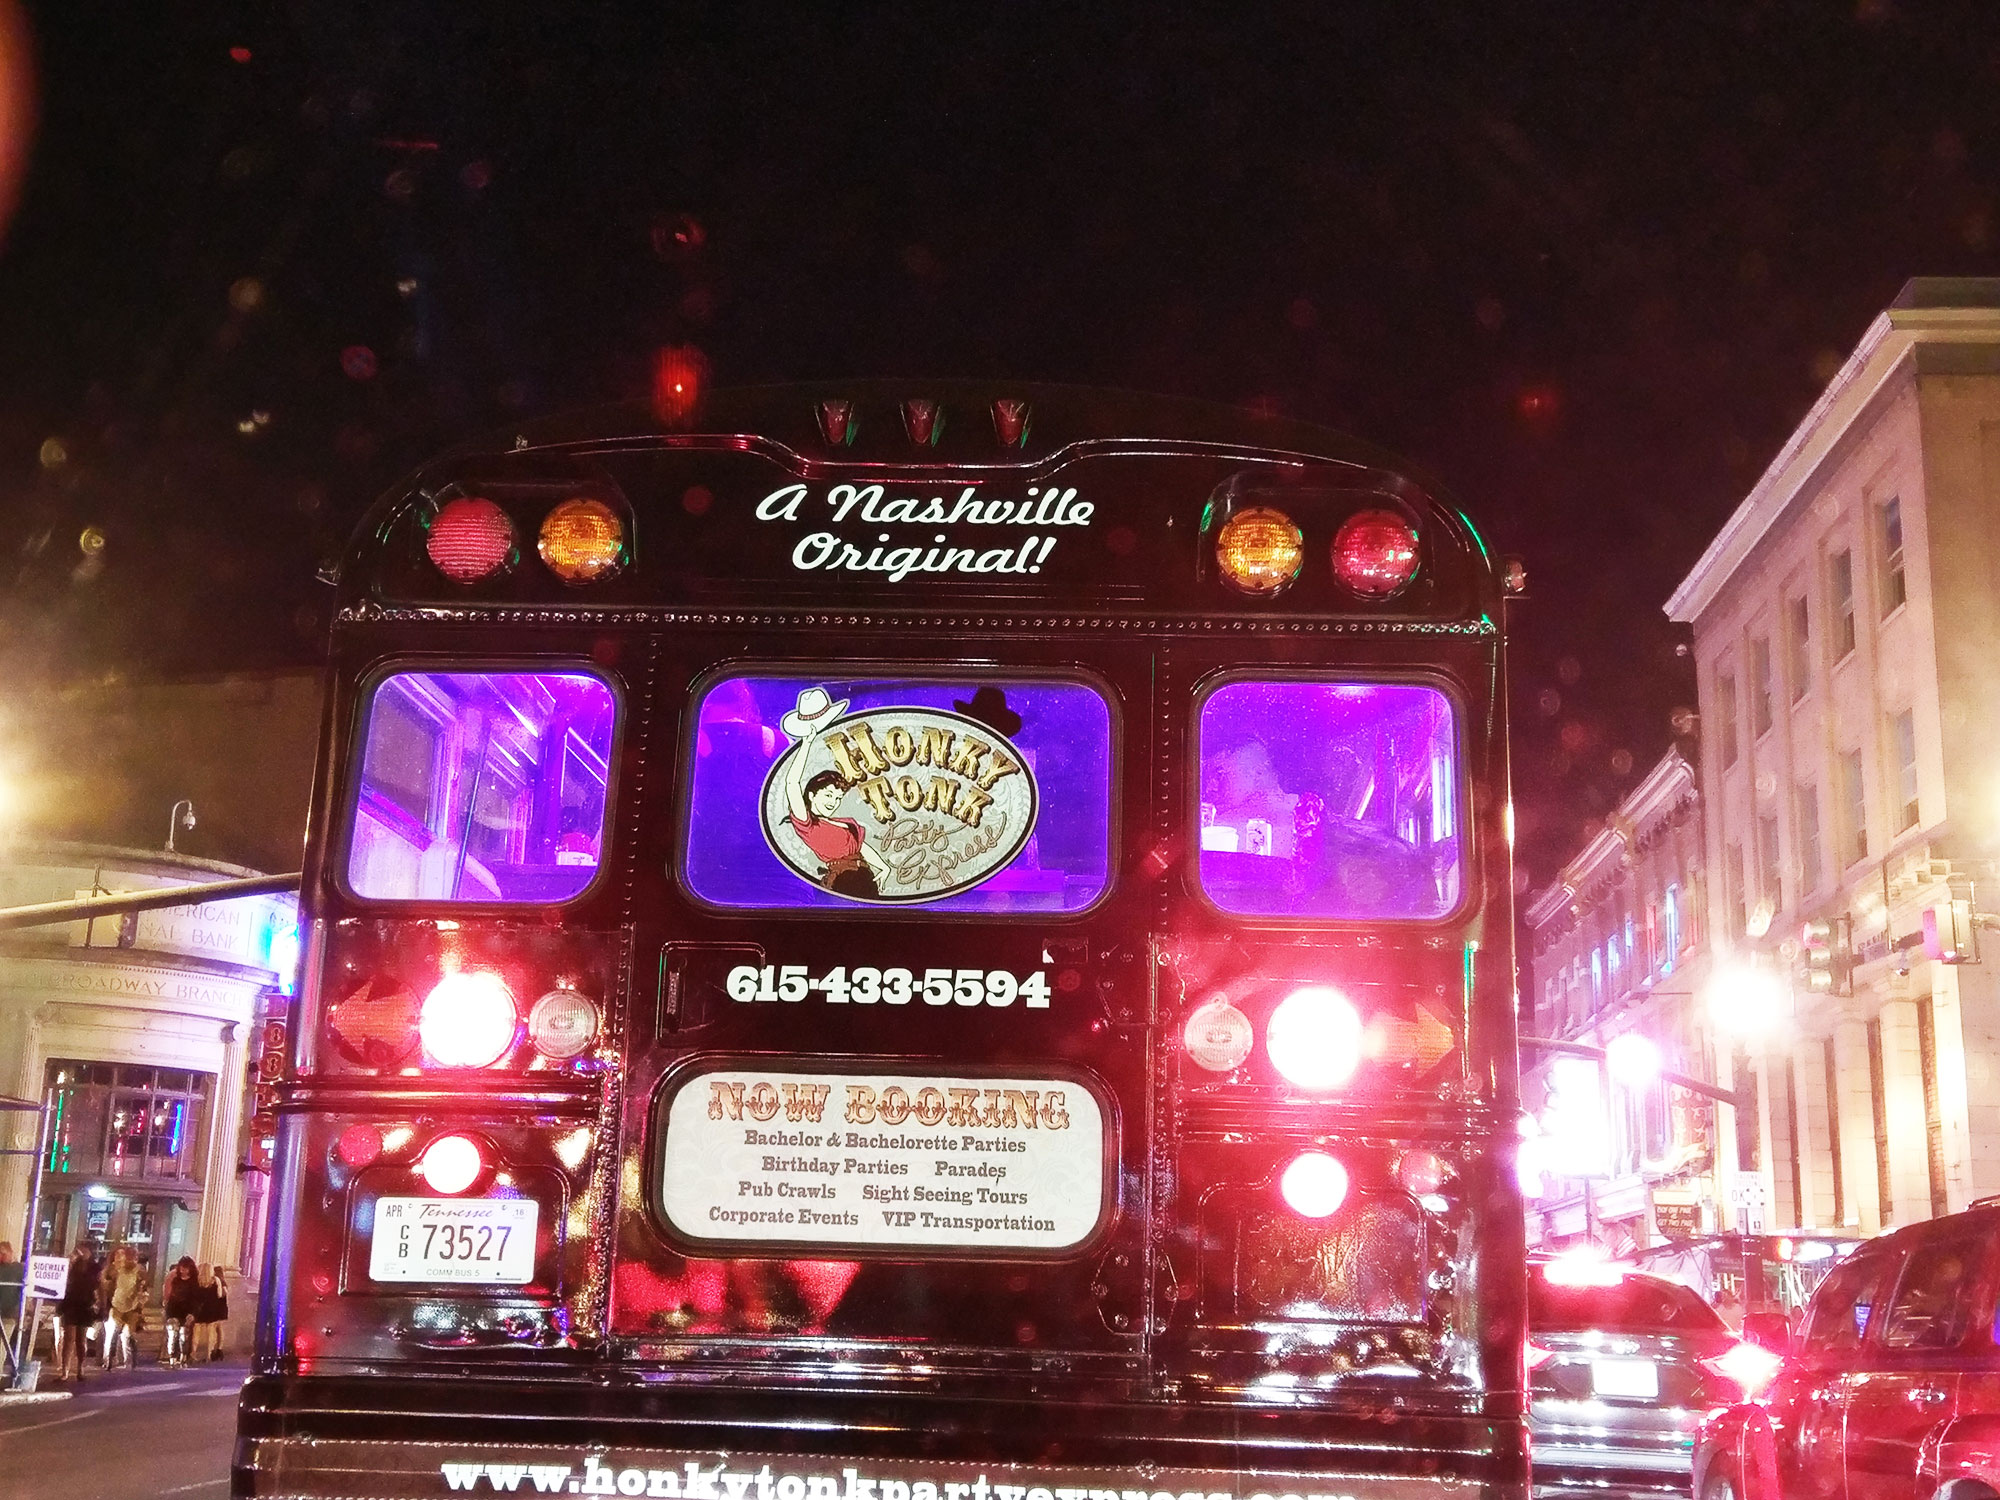 A bachelorette party bus in downtown Nashville, TN.